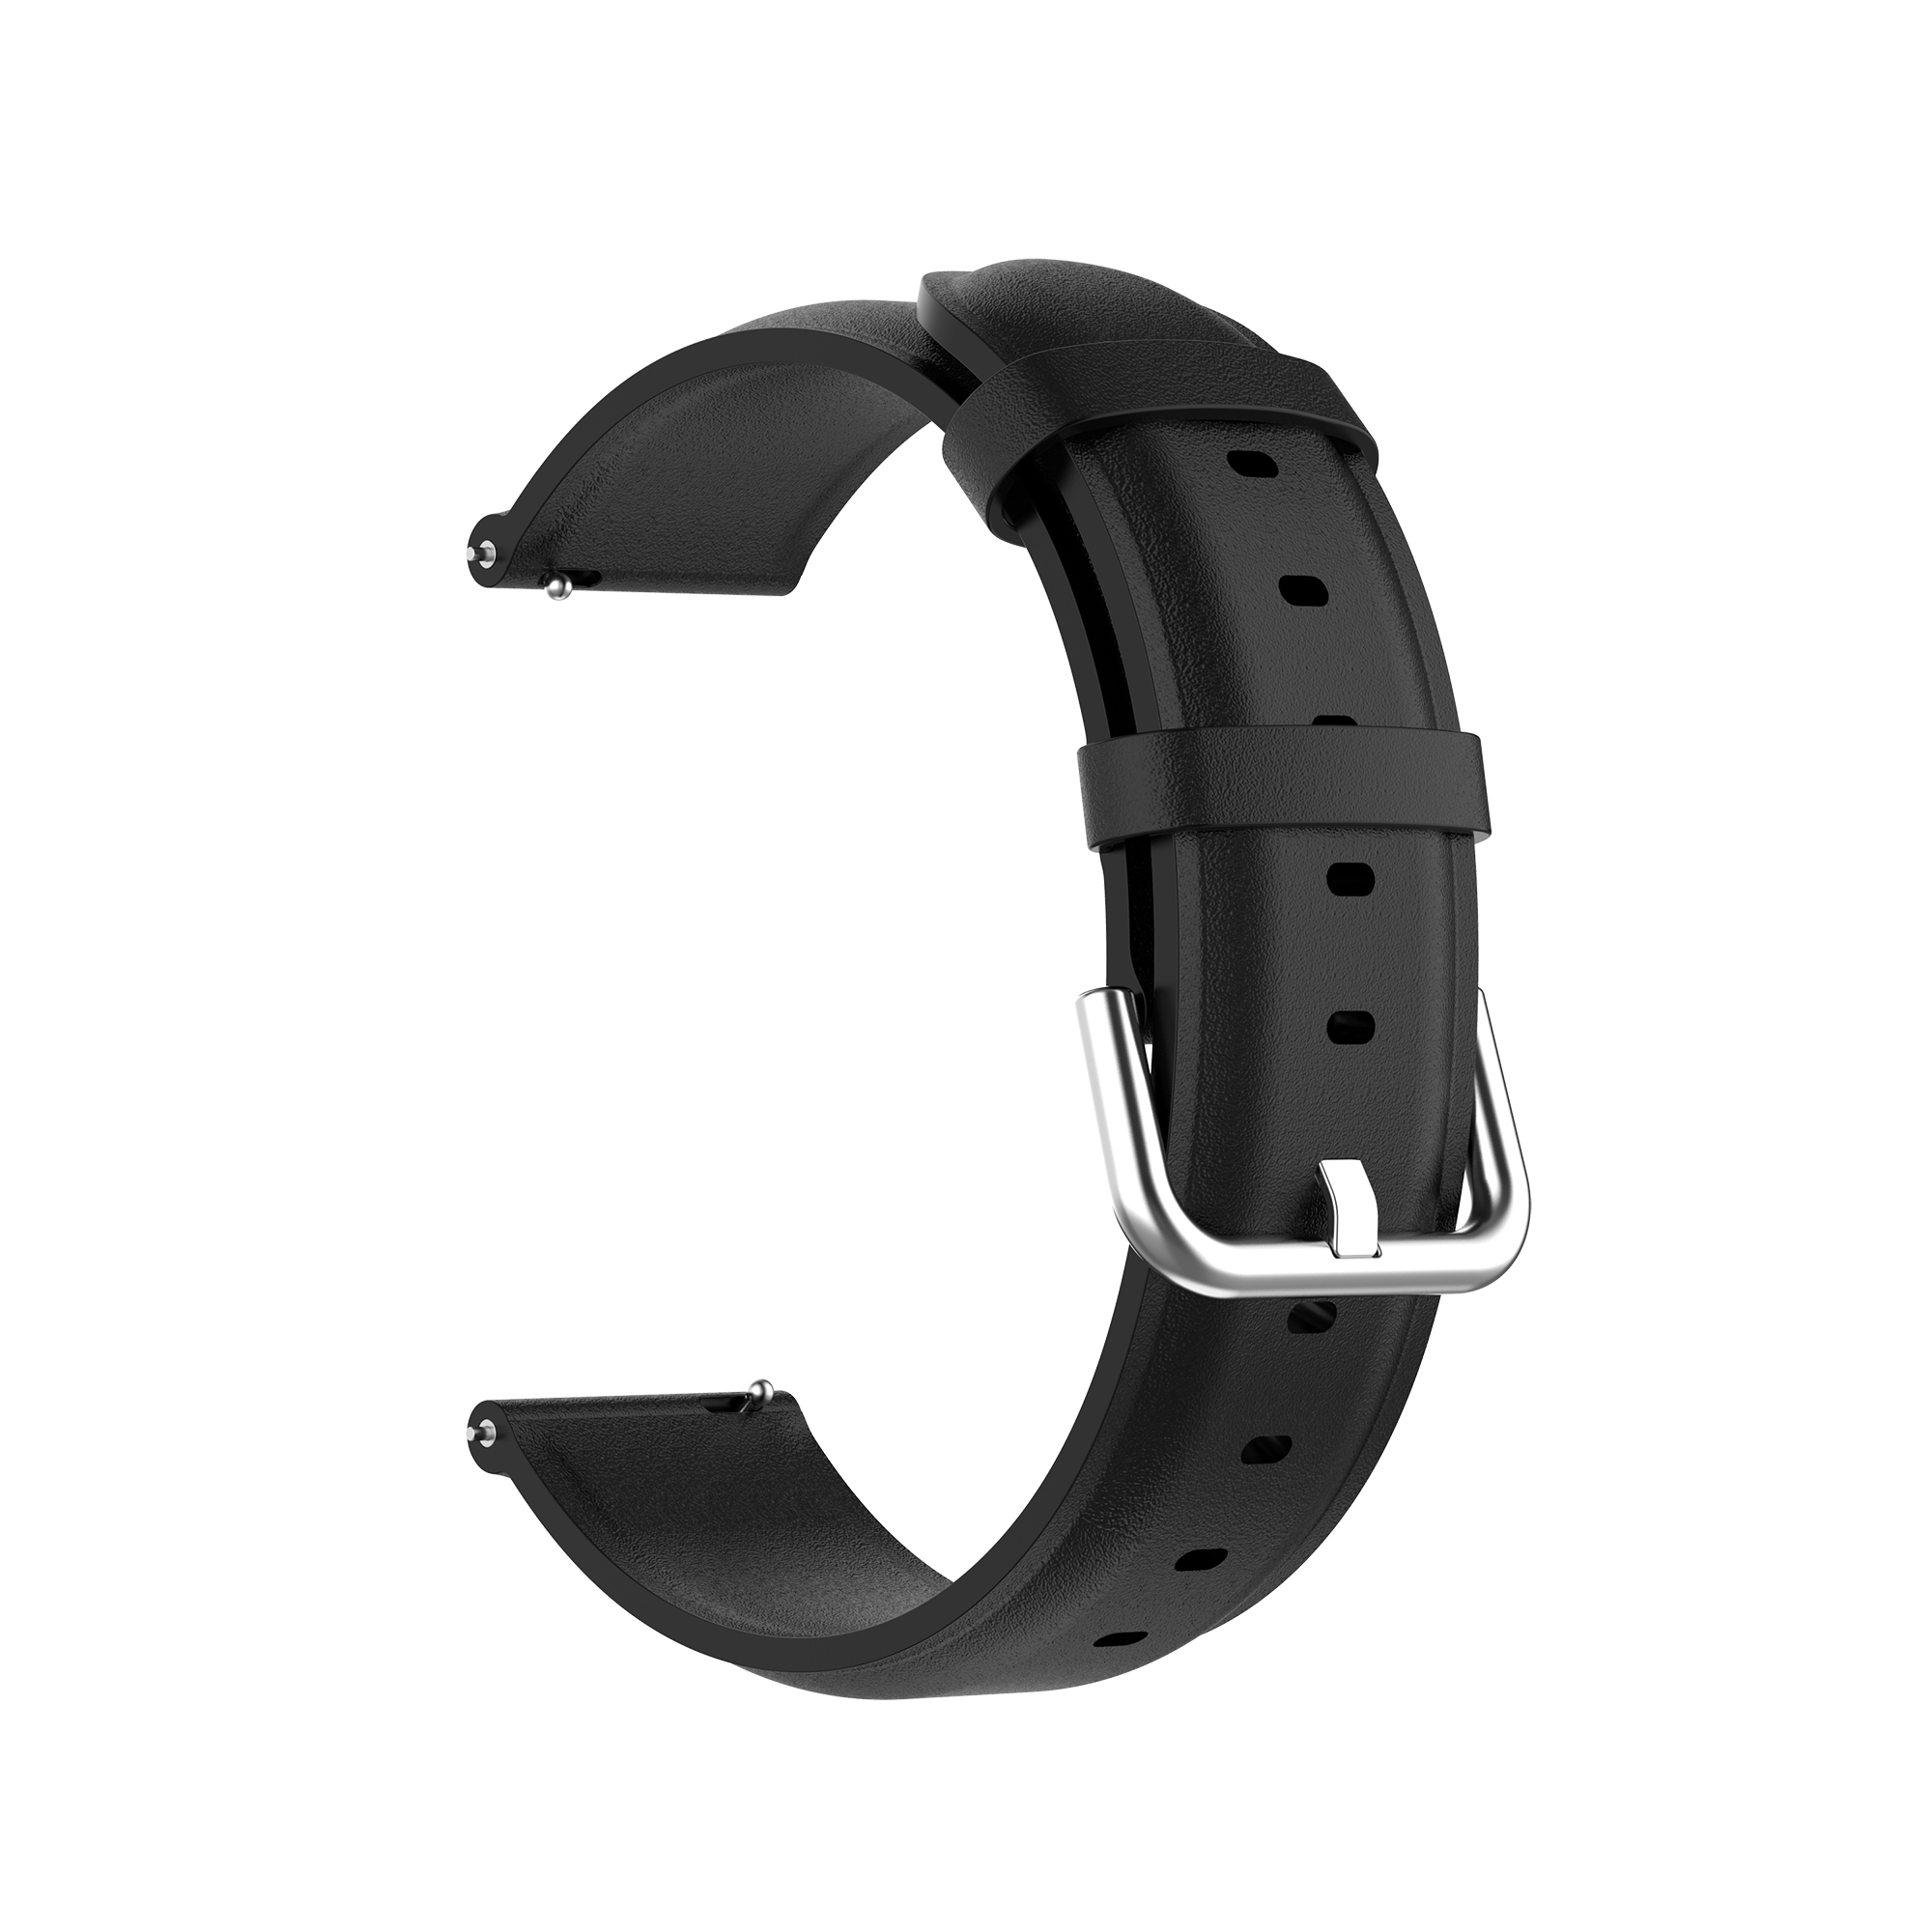 22mm-Universal-Watch-Band-Round-Tail-Leather-Watch-Strap-for-Huawei-Watch-GT2-Pro-Zeblaze-GTS-BW-HL3-1765660-15